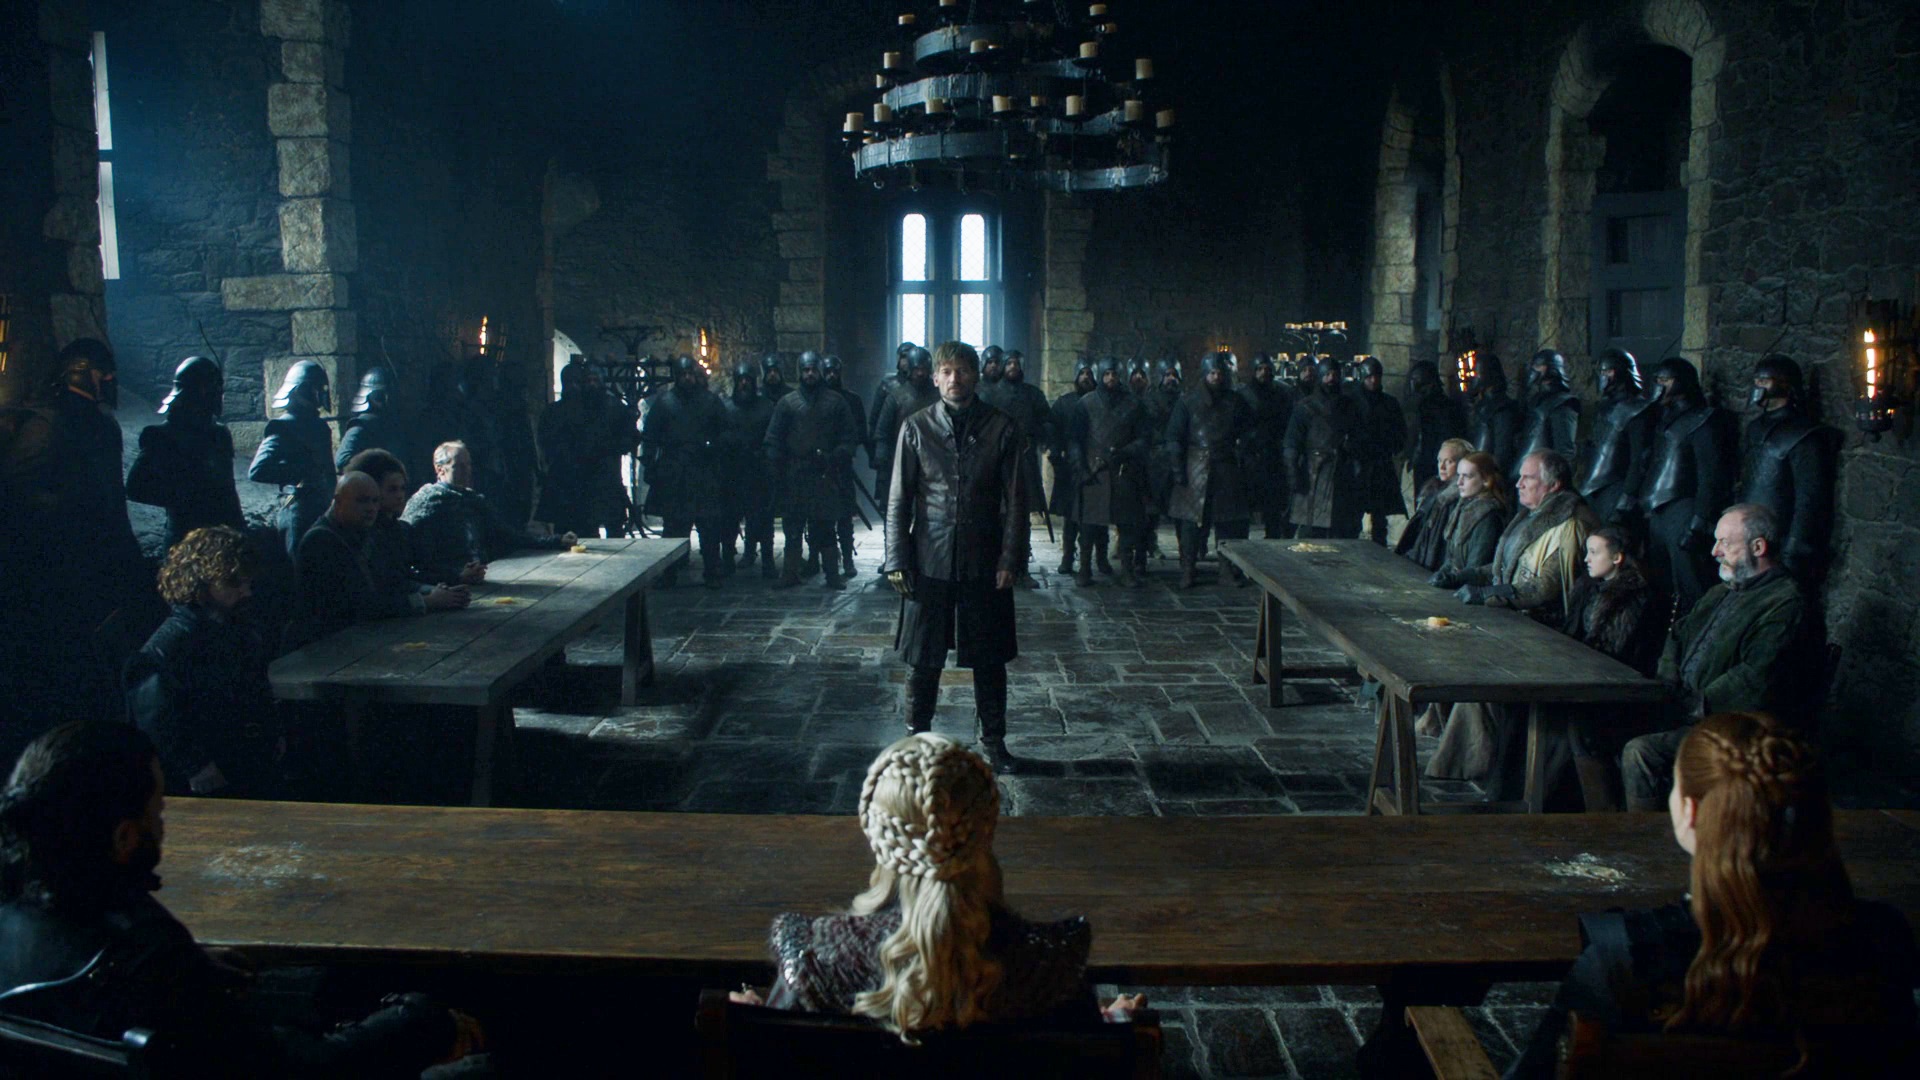 Jaime Lannister Winterfell Trial 802 Season 8 Daenerys Targaryen Jon Snow Sansa Stark Tyrion Lannister Varys Missandei Jorah Brianne Davos